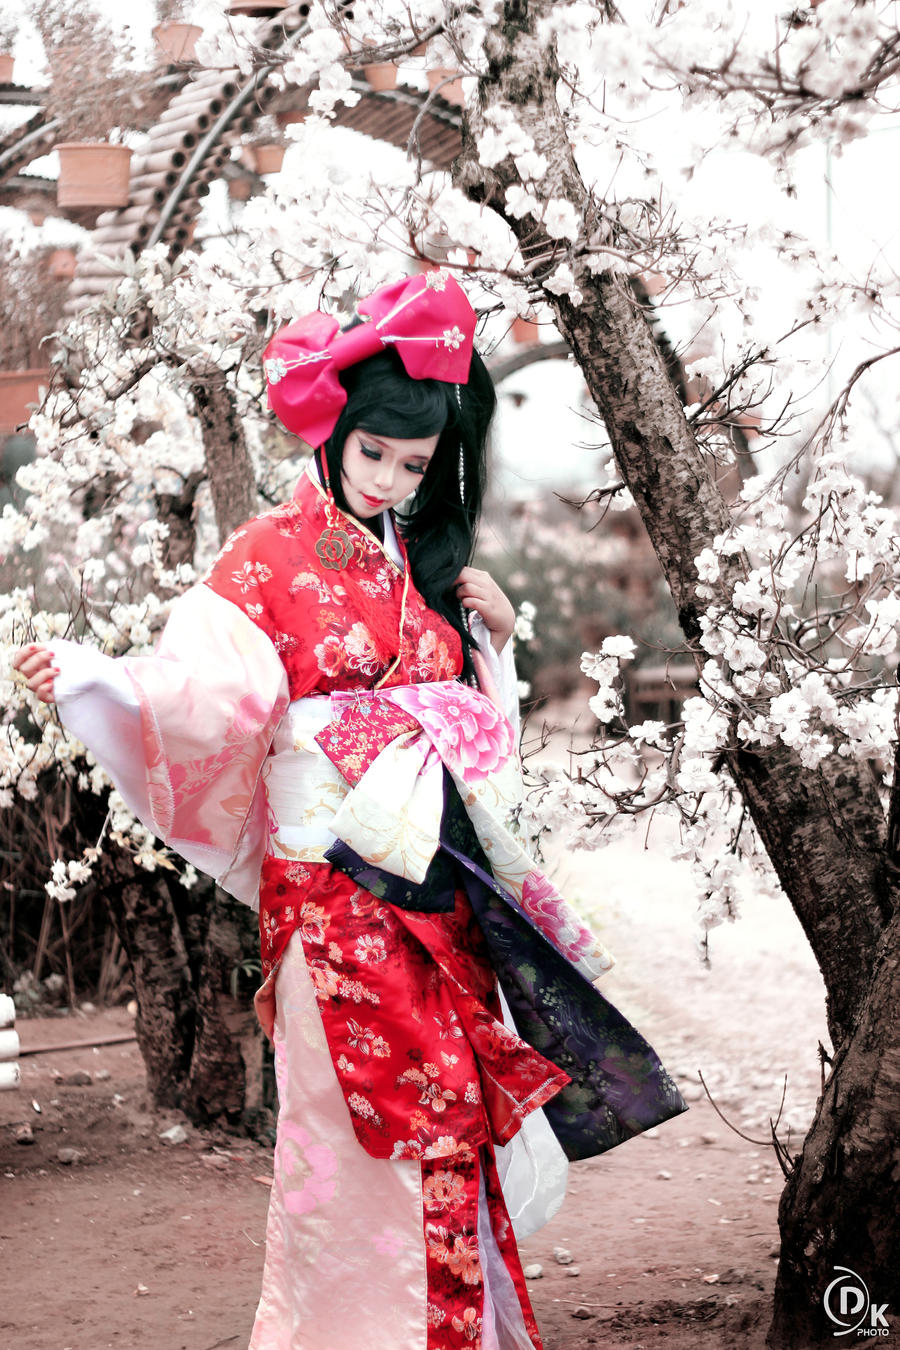 Hime Kimono 2 by chievietnam on DeviantArt